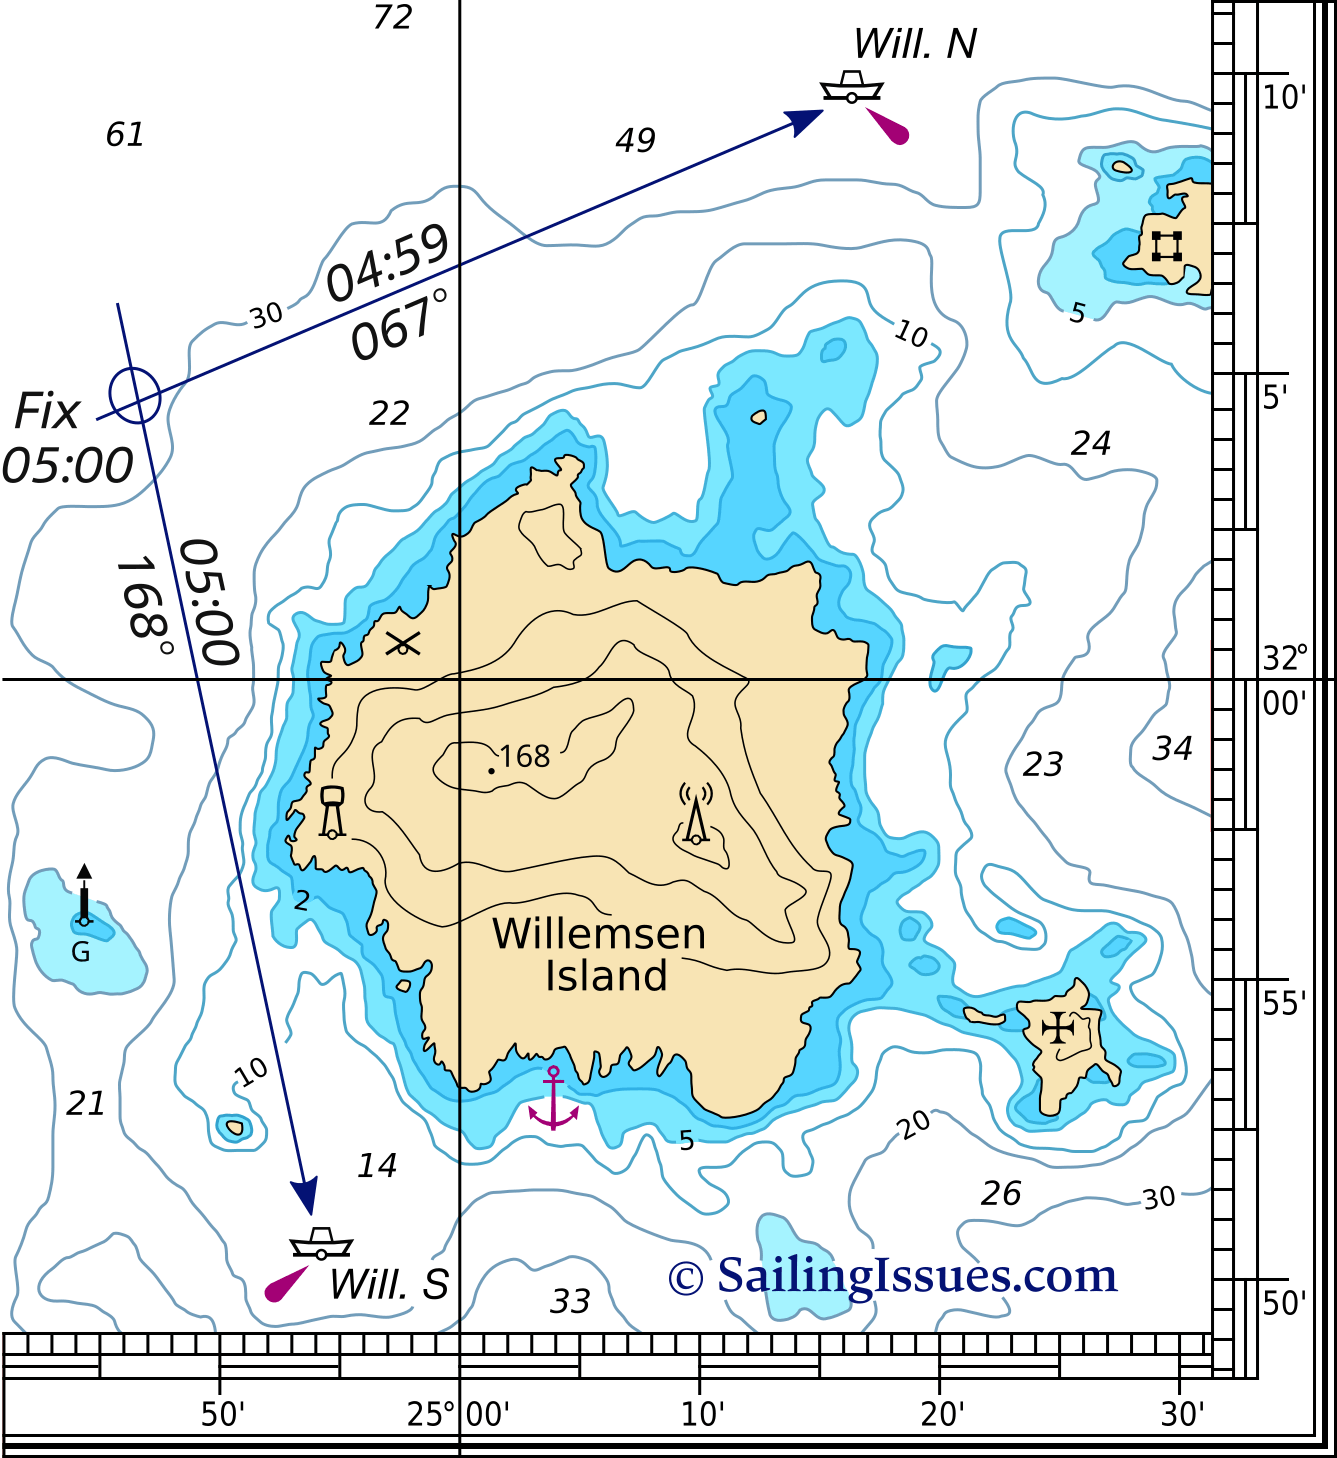 Position Fix Nautical Chart Navigation 3x 